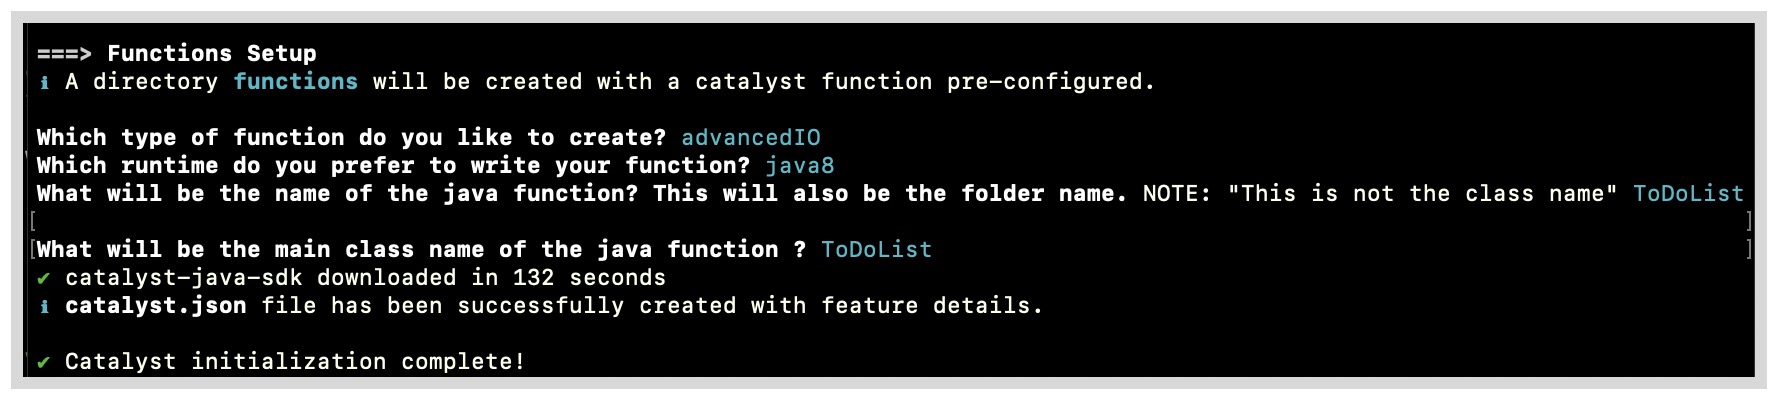 catalyst_todo_java_function_setup